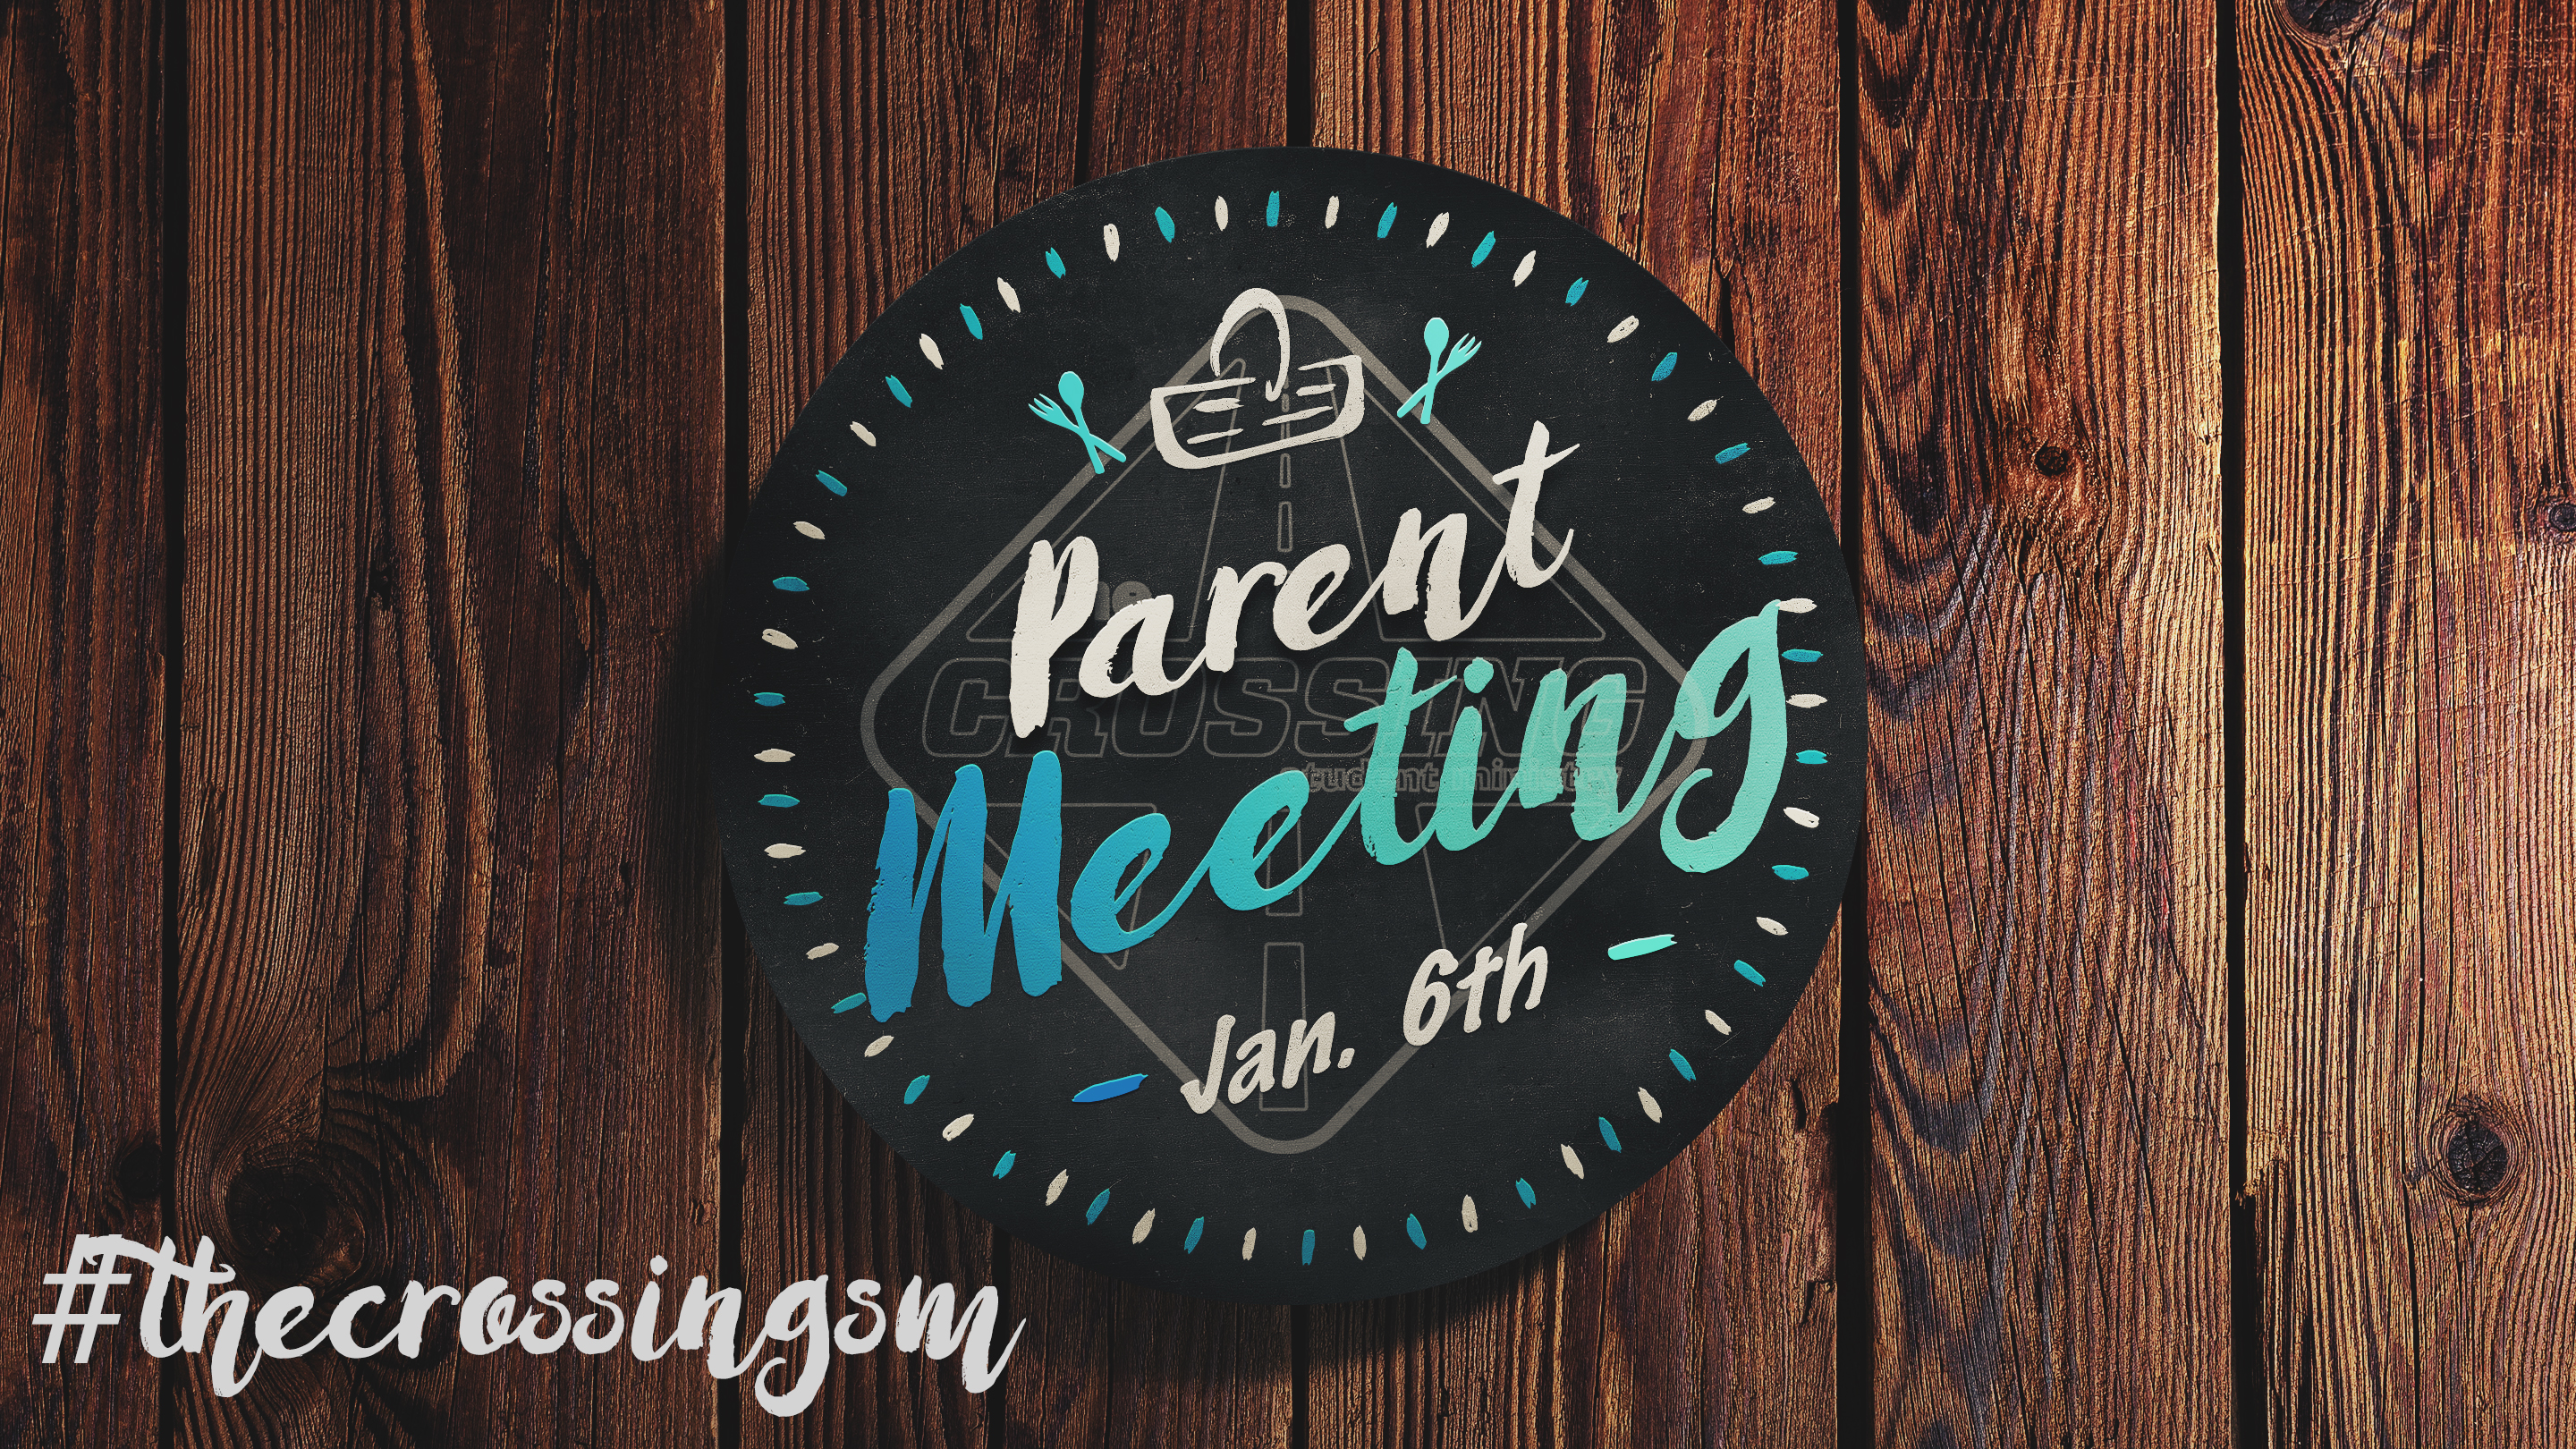 Crossing Parent Meeting